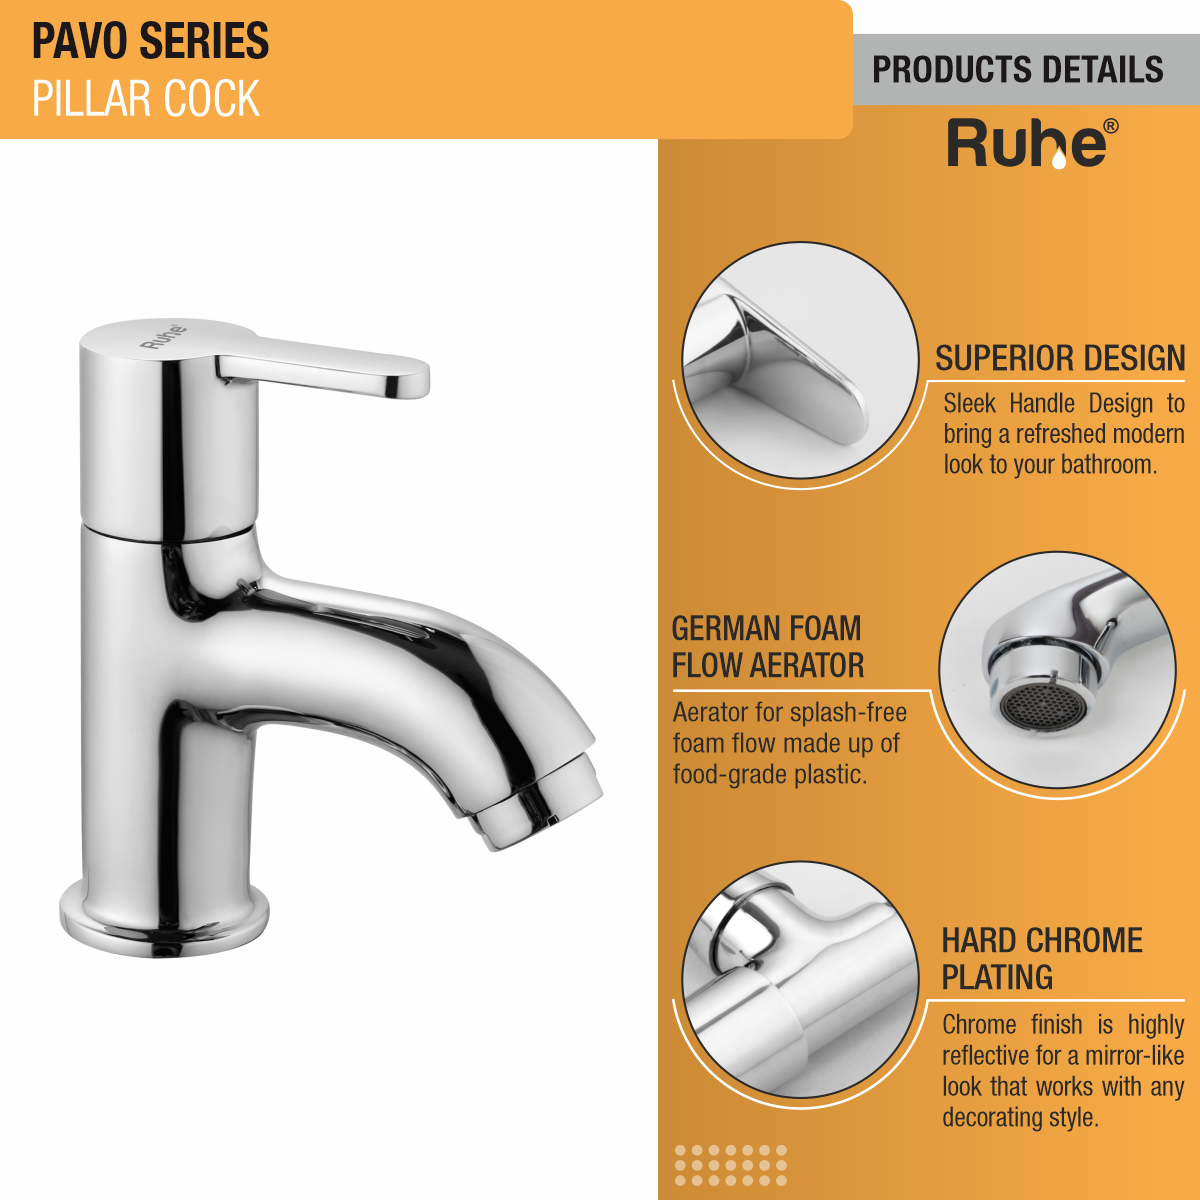 Pavo Pillar Tap Brass Faucet product details